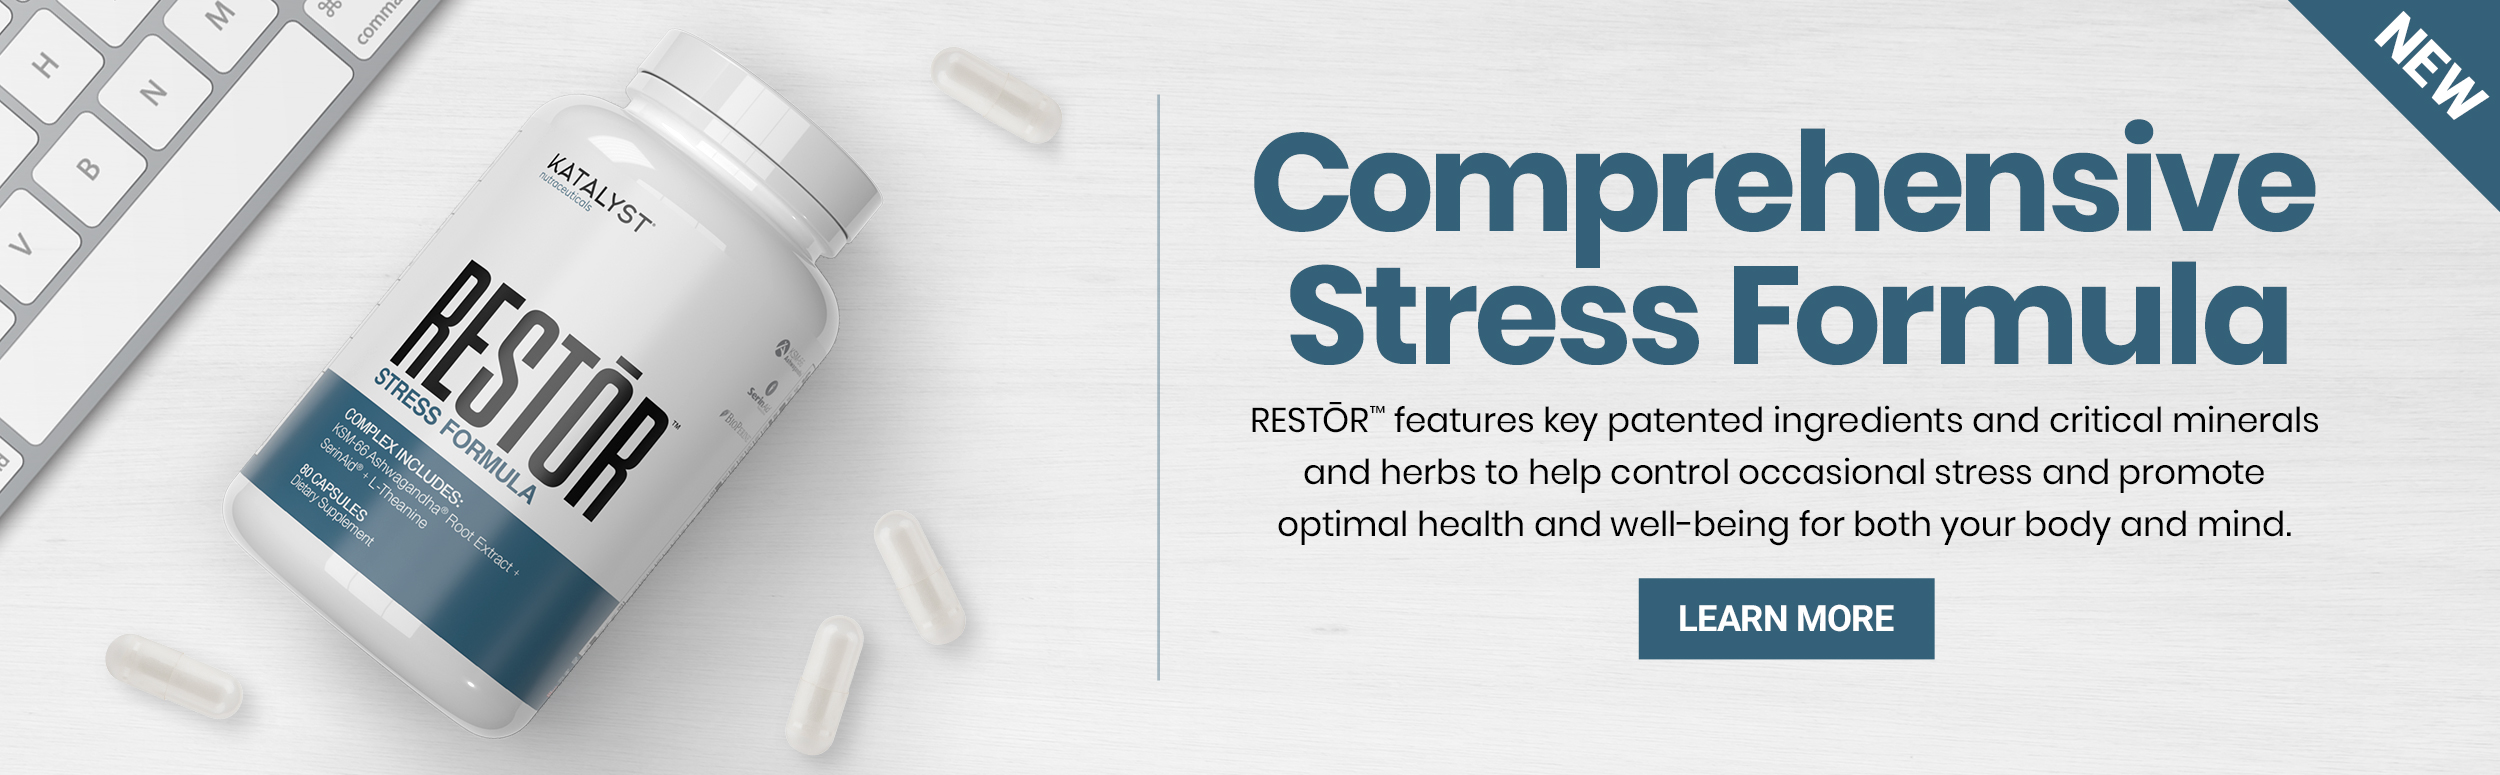 Katalyst - Restor - Comprehensive Stress Formula - Click to Learn More